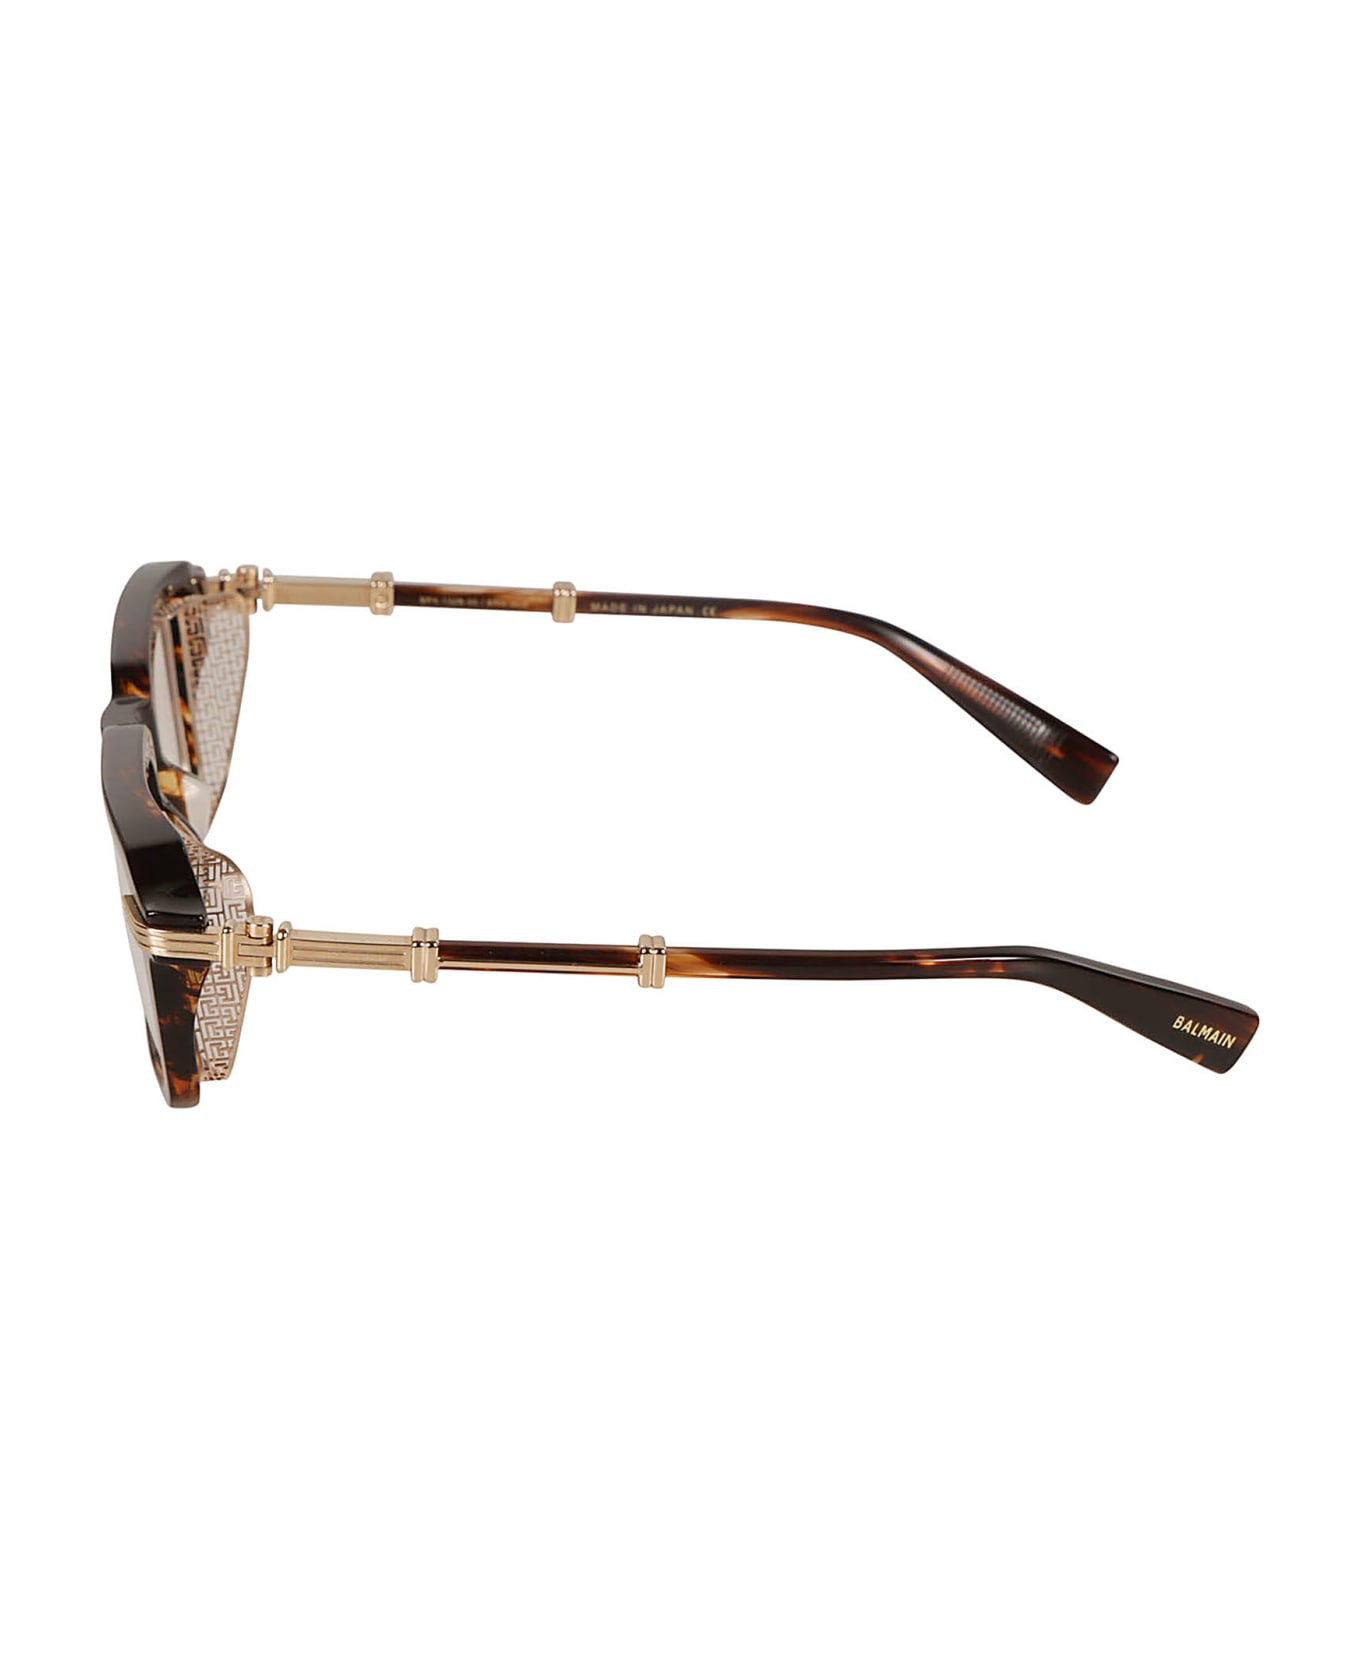 Balmain Legion Iii Glasses Glasses - Brown/Gold